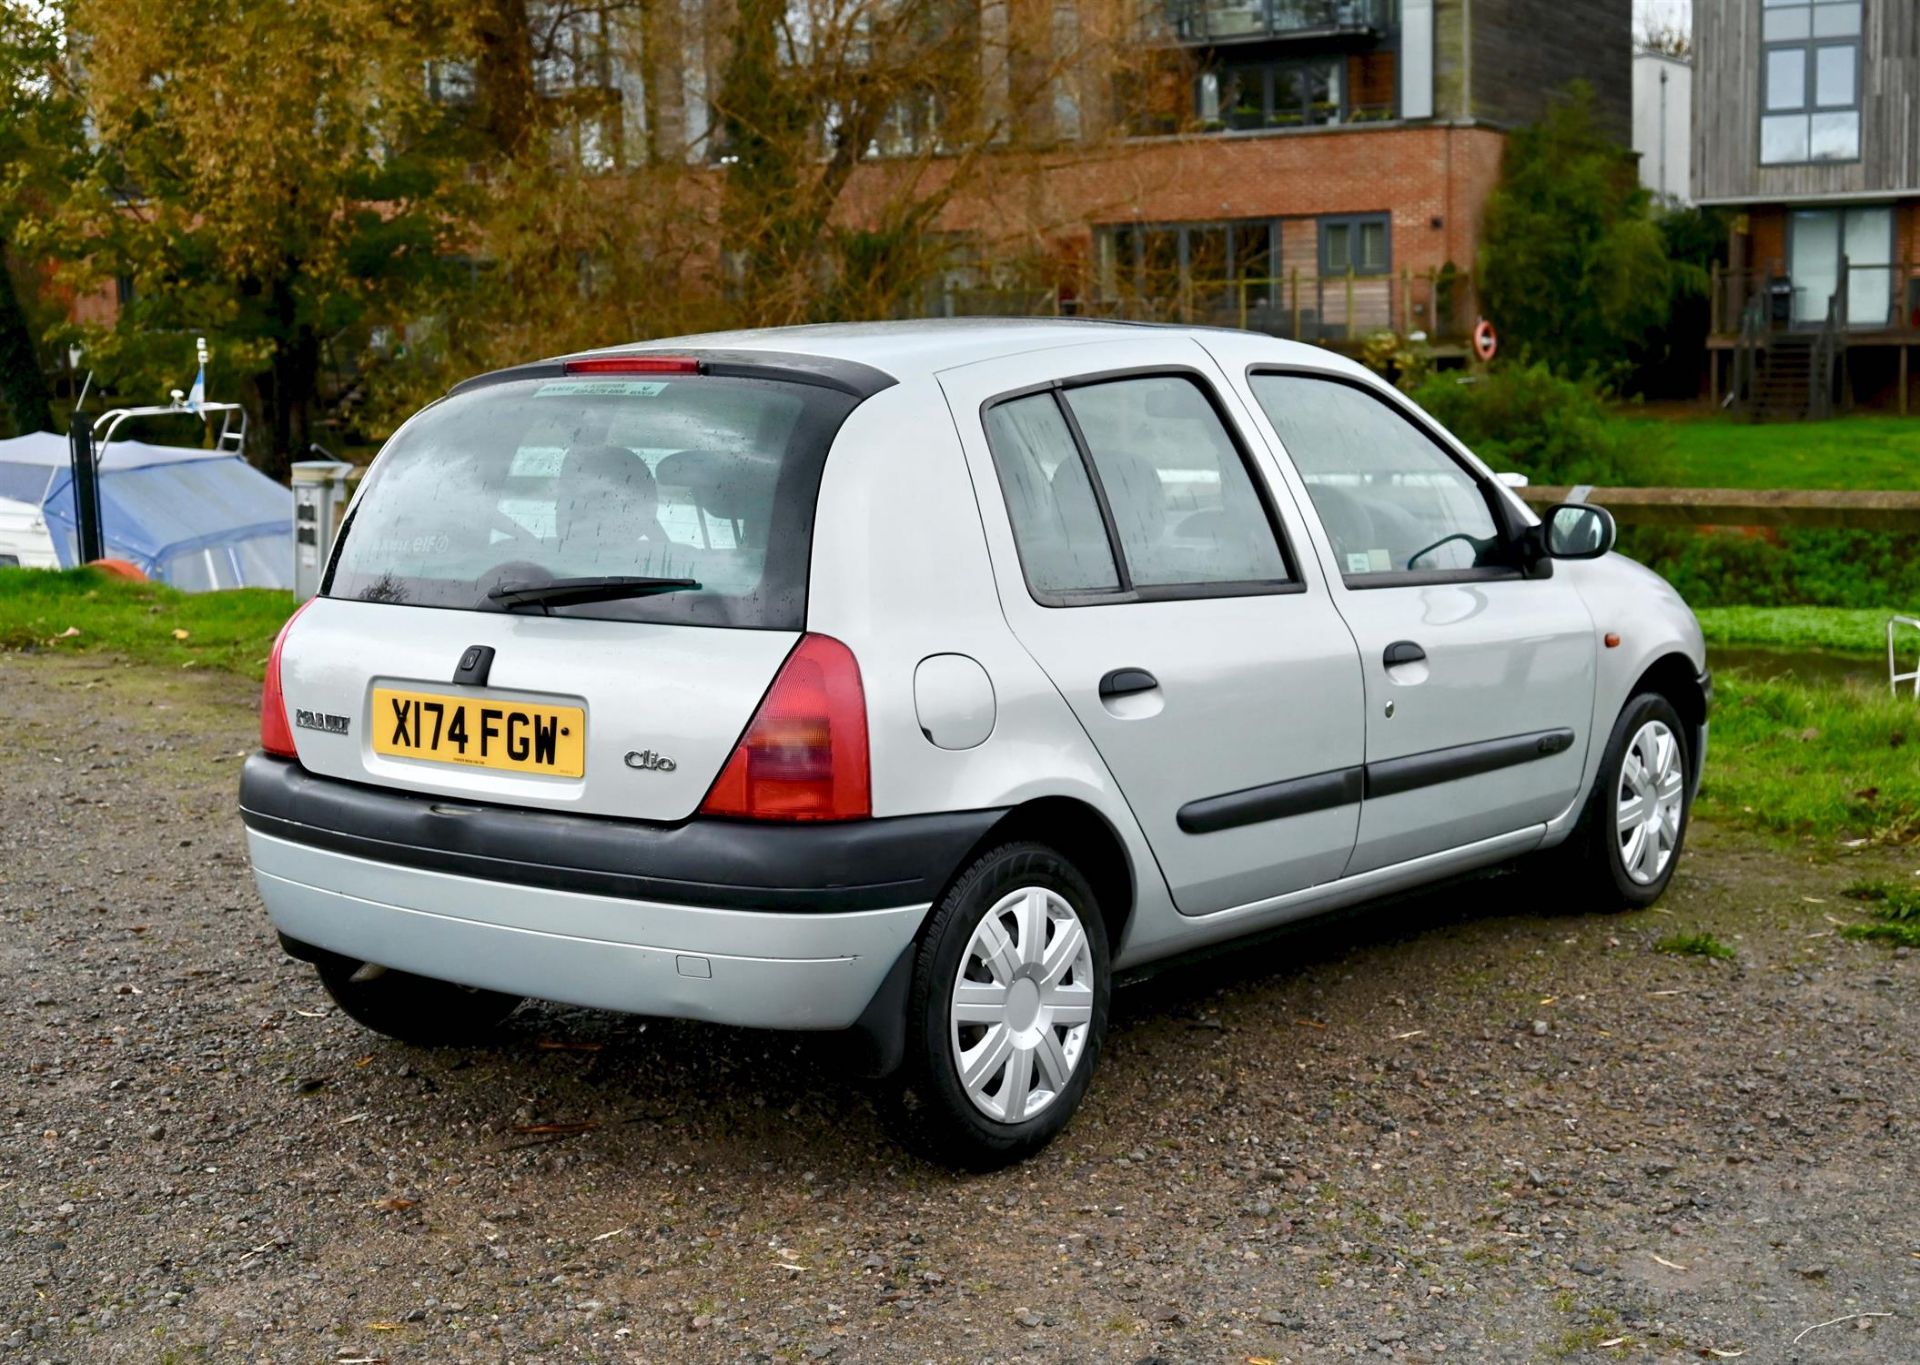 2000 Renault Clio 1.4 Etoile Hatchback. Registration number X174 FGW - Petrol, 5-Speed Manual. - Image 4 of 13